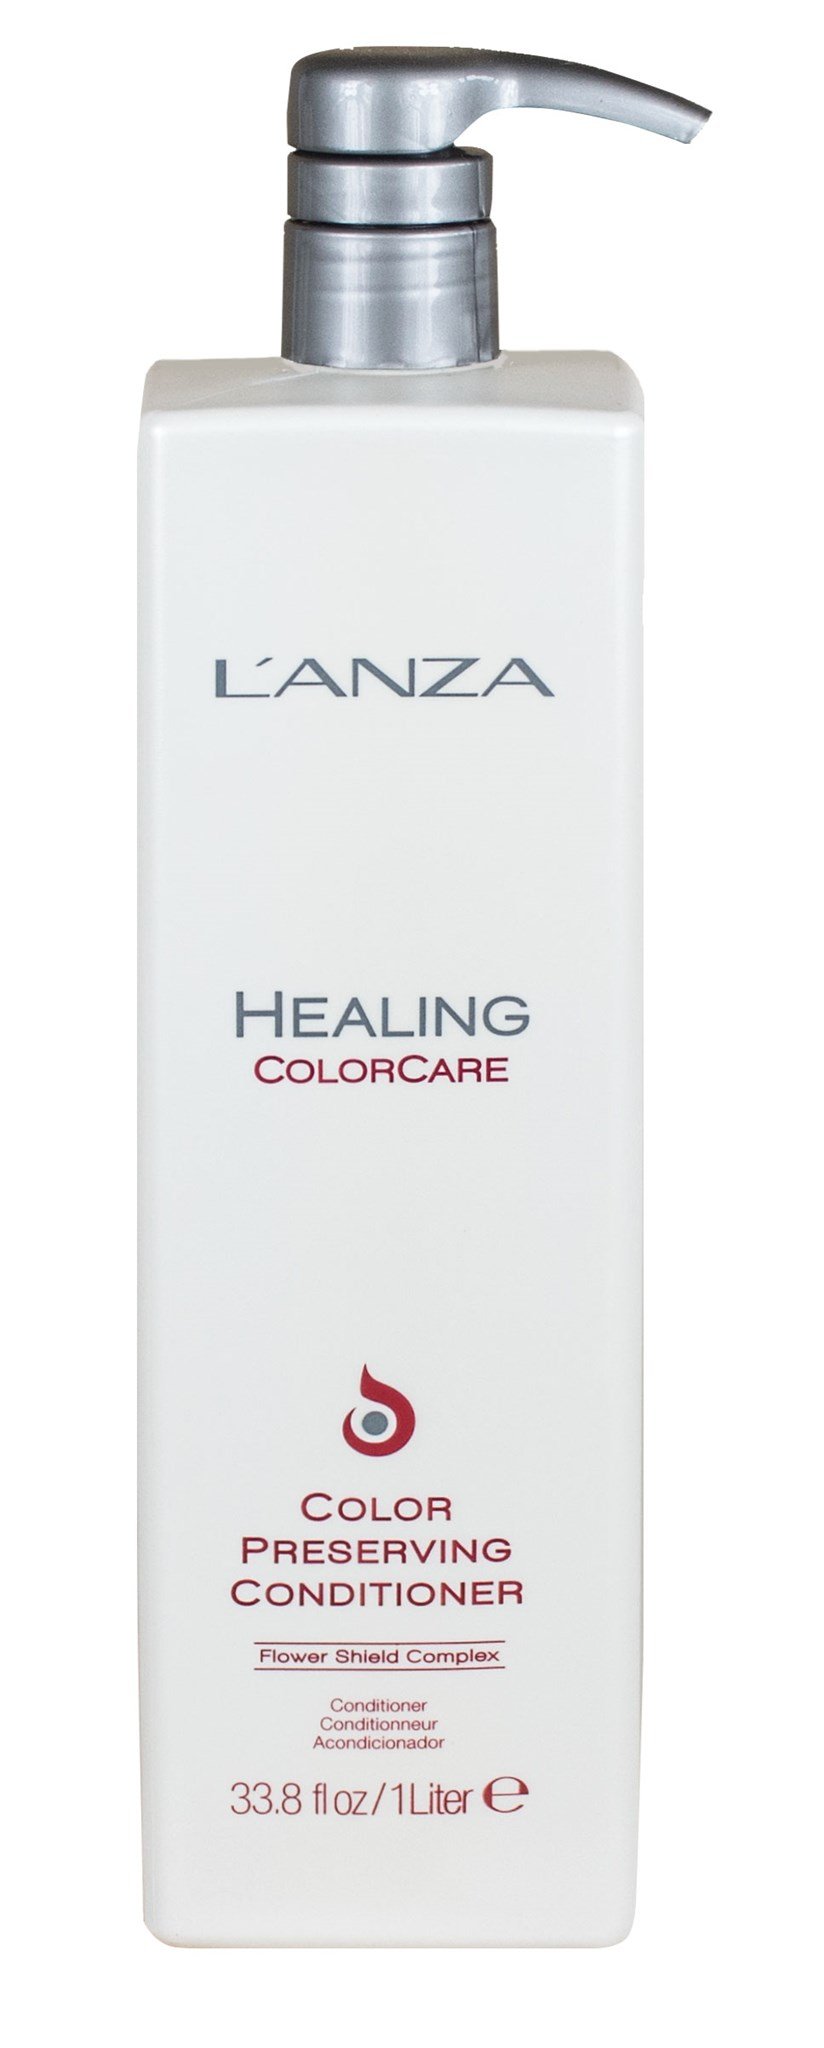 Lanza Healing ColorCare Color-Preserving Conditioner Ltr